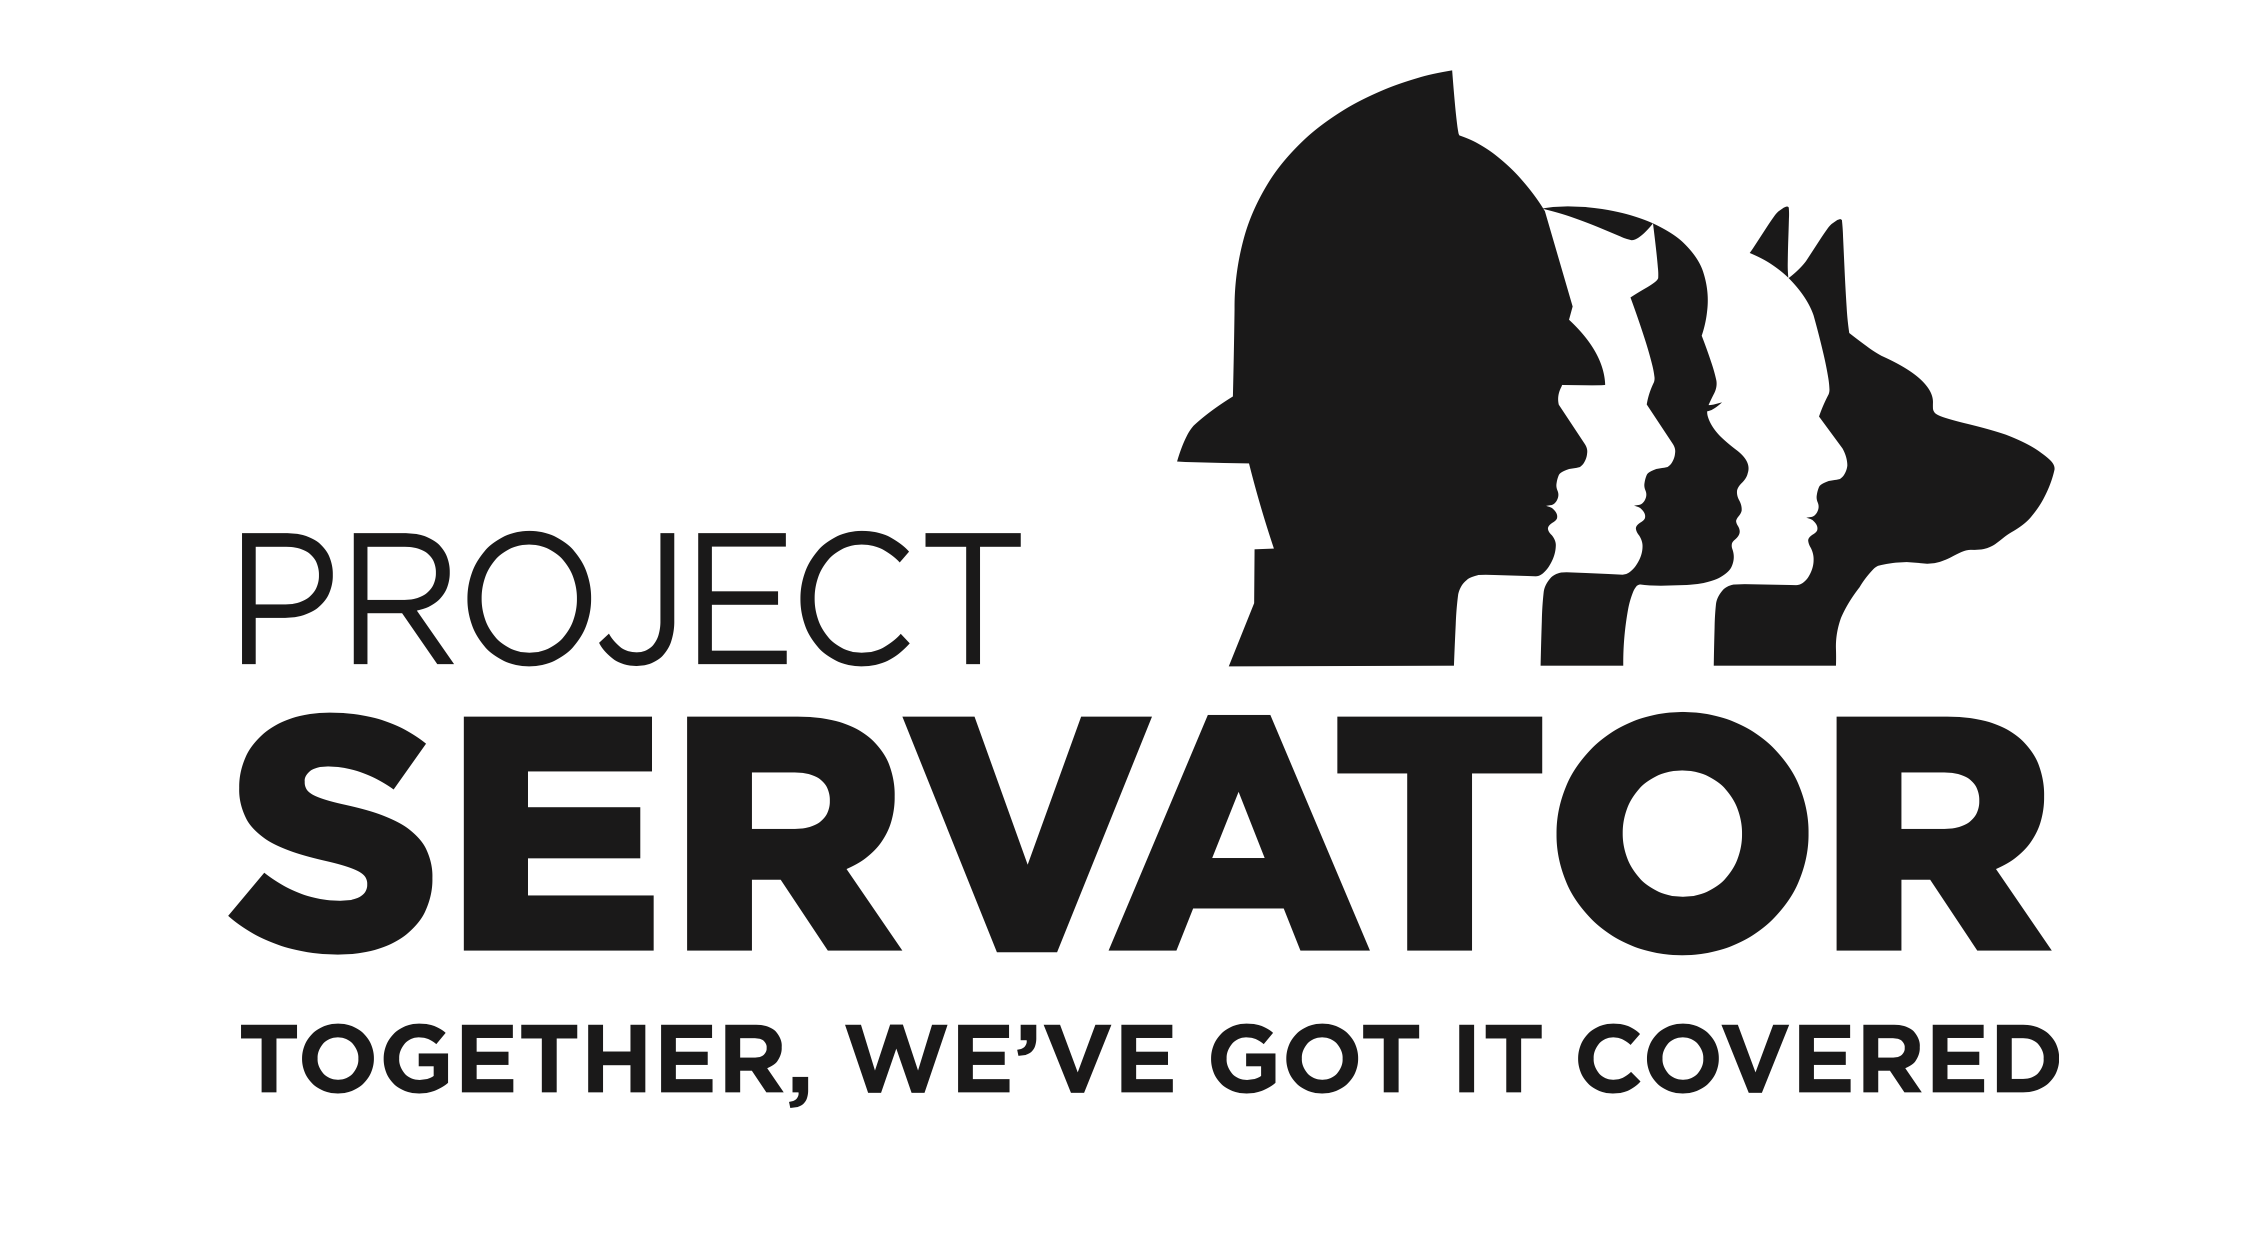 Project Servator logo